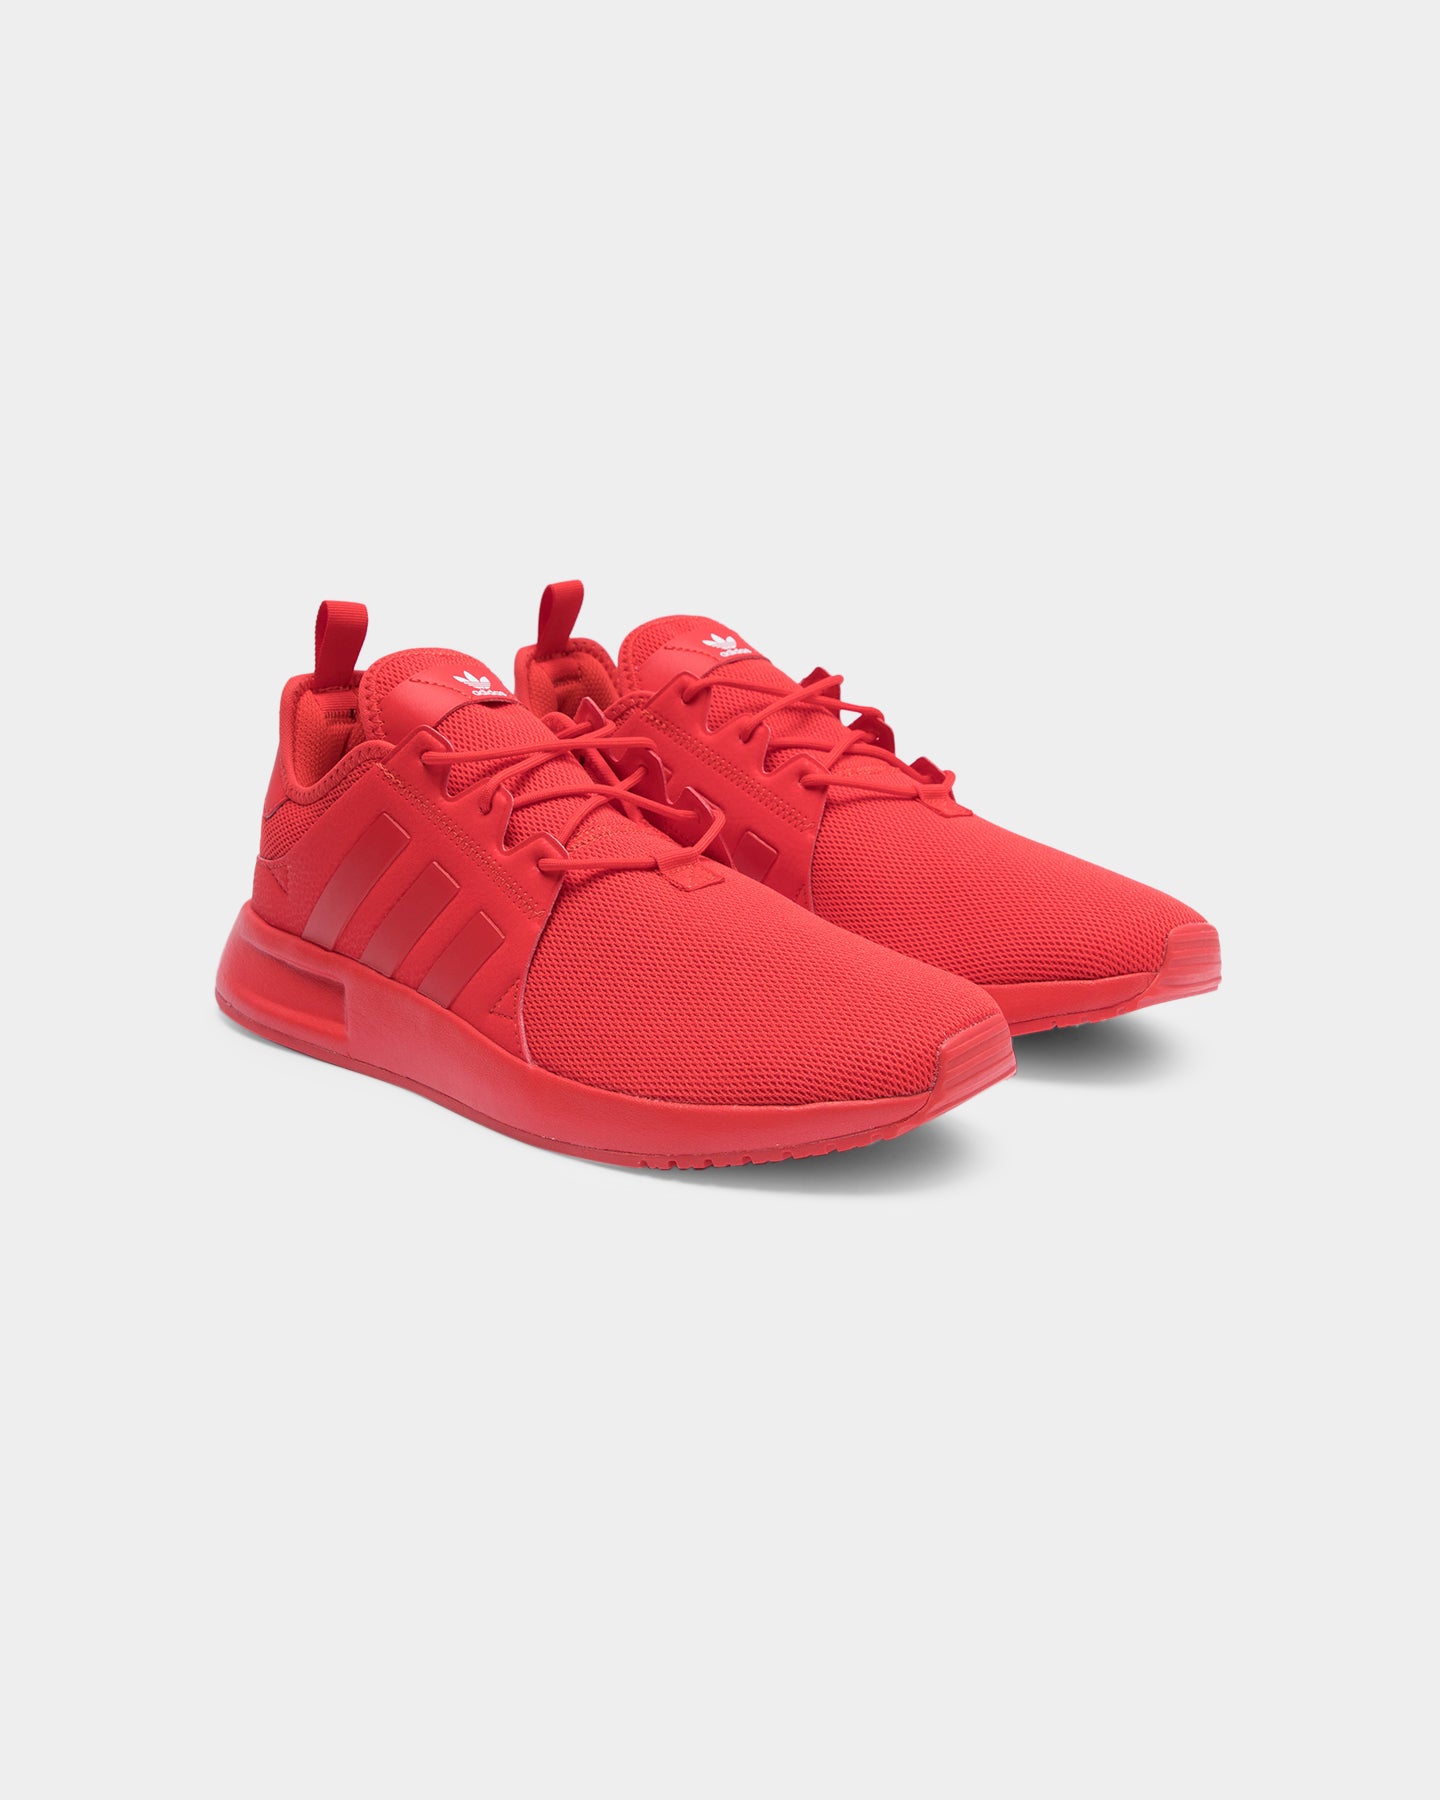 Adidas X_PLR Triple Red | Culture Kings US